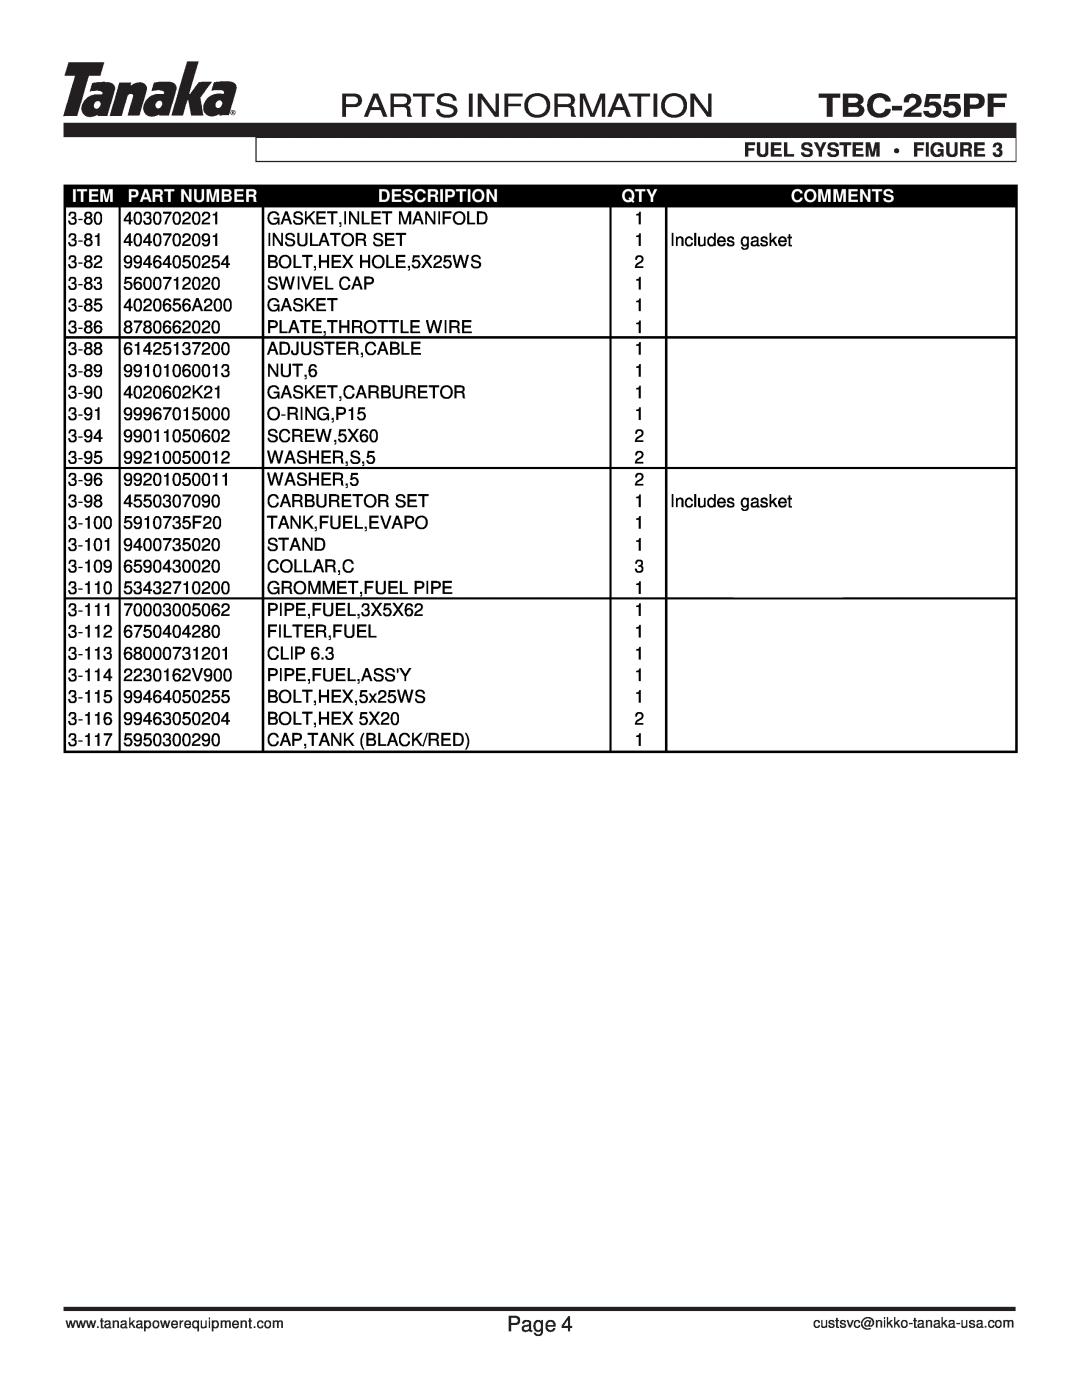 Tanaka TBC-255PF manual Parts Information, Fuel System Figure, Page, Part Number, Description, Comments 